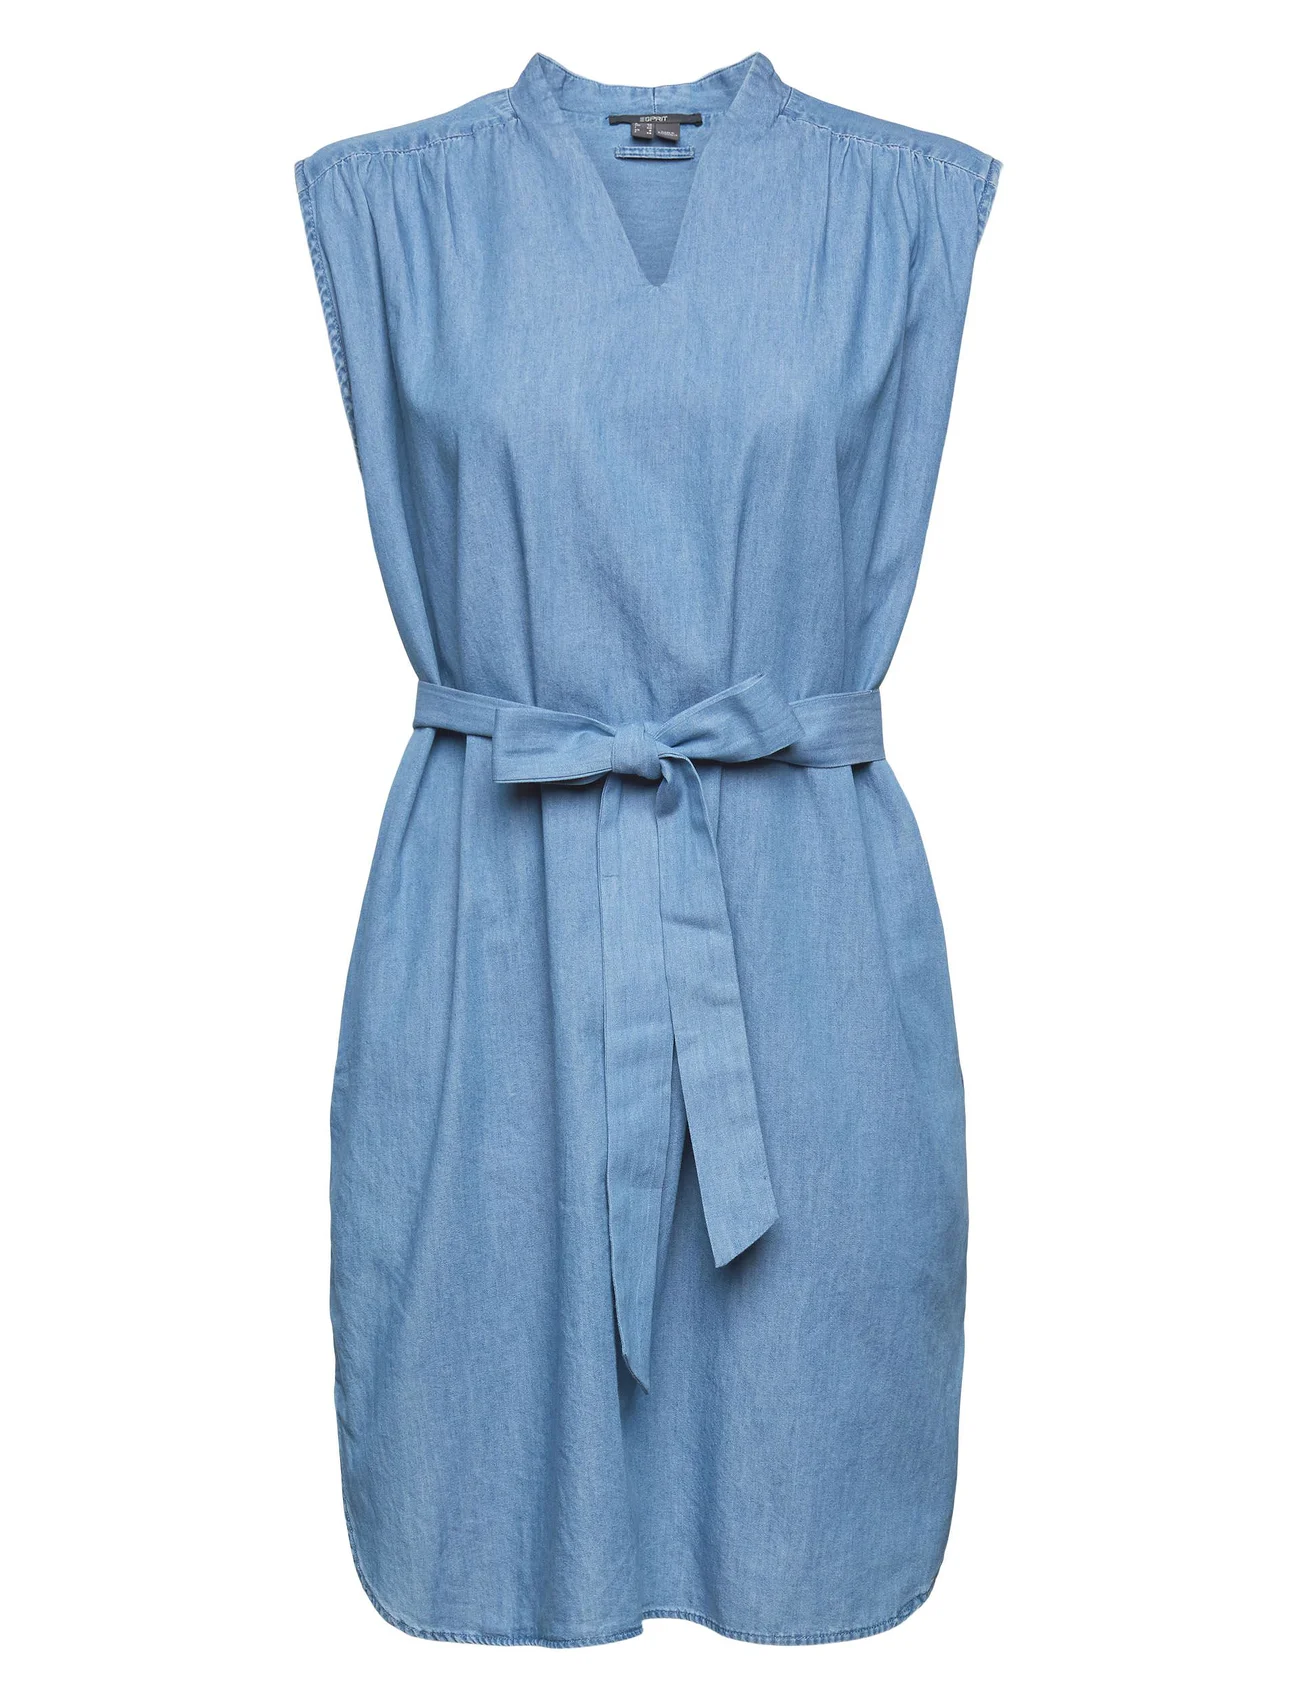 Esprit Collection - Denim-effect dress - paitamekot - blue medium wash - 0